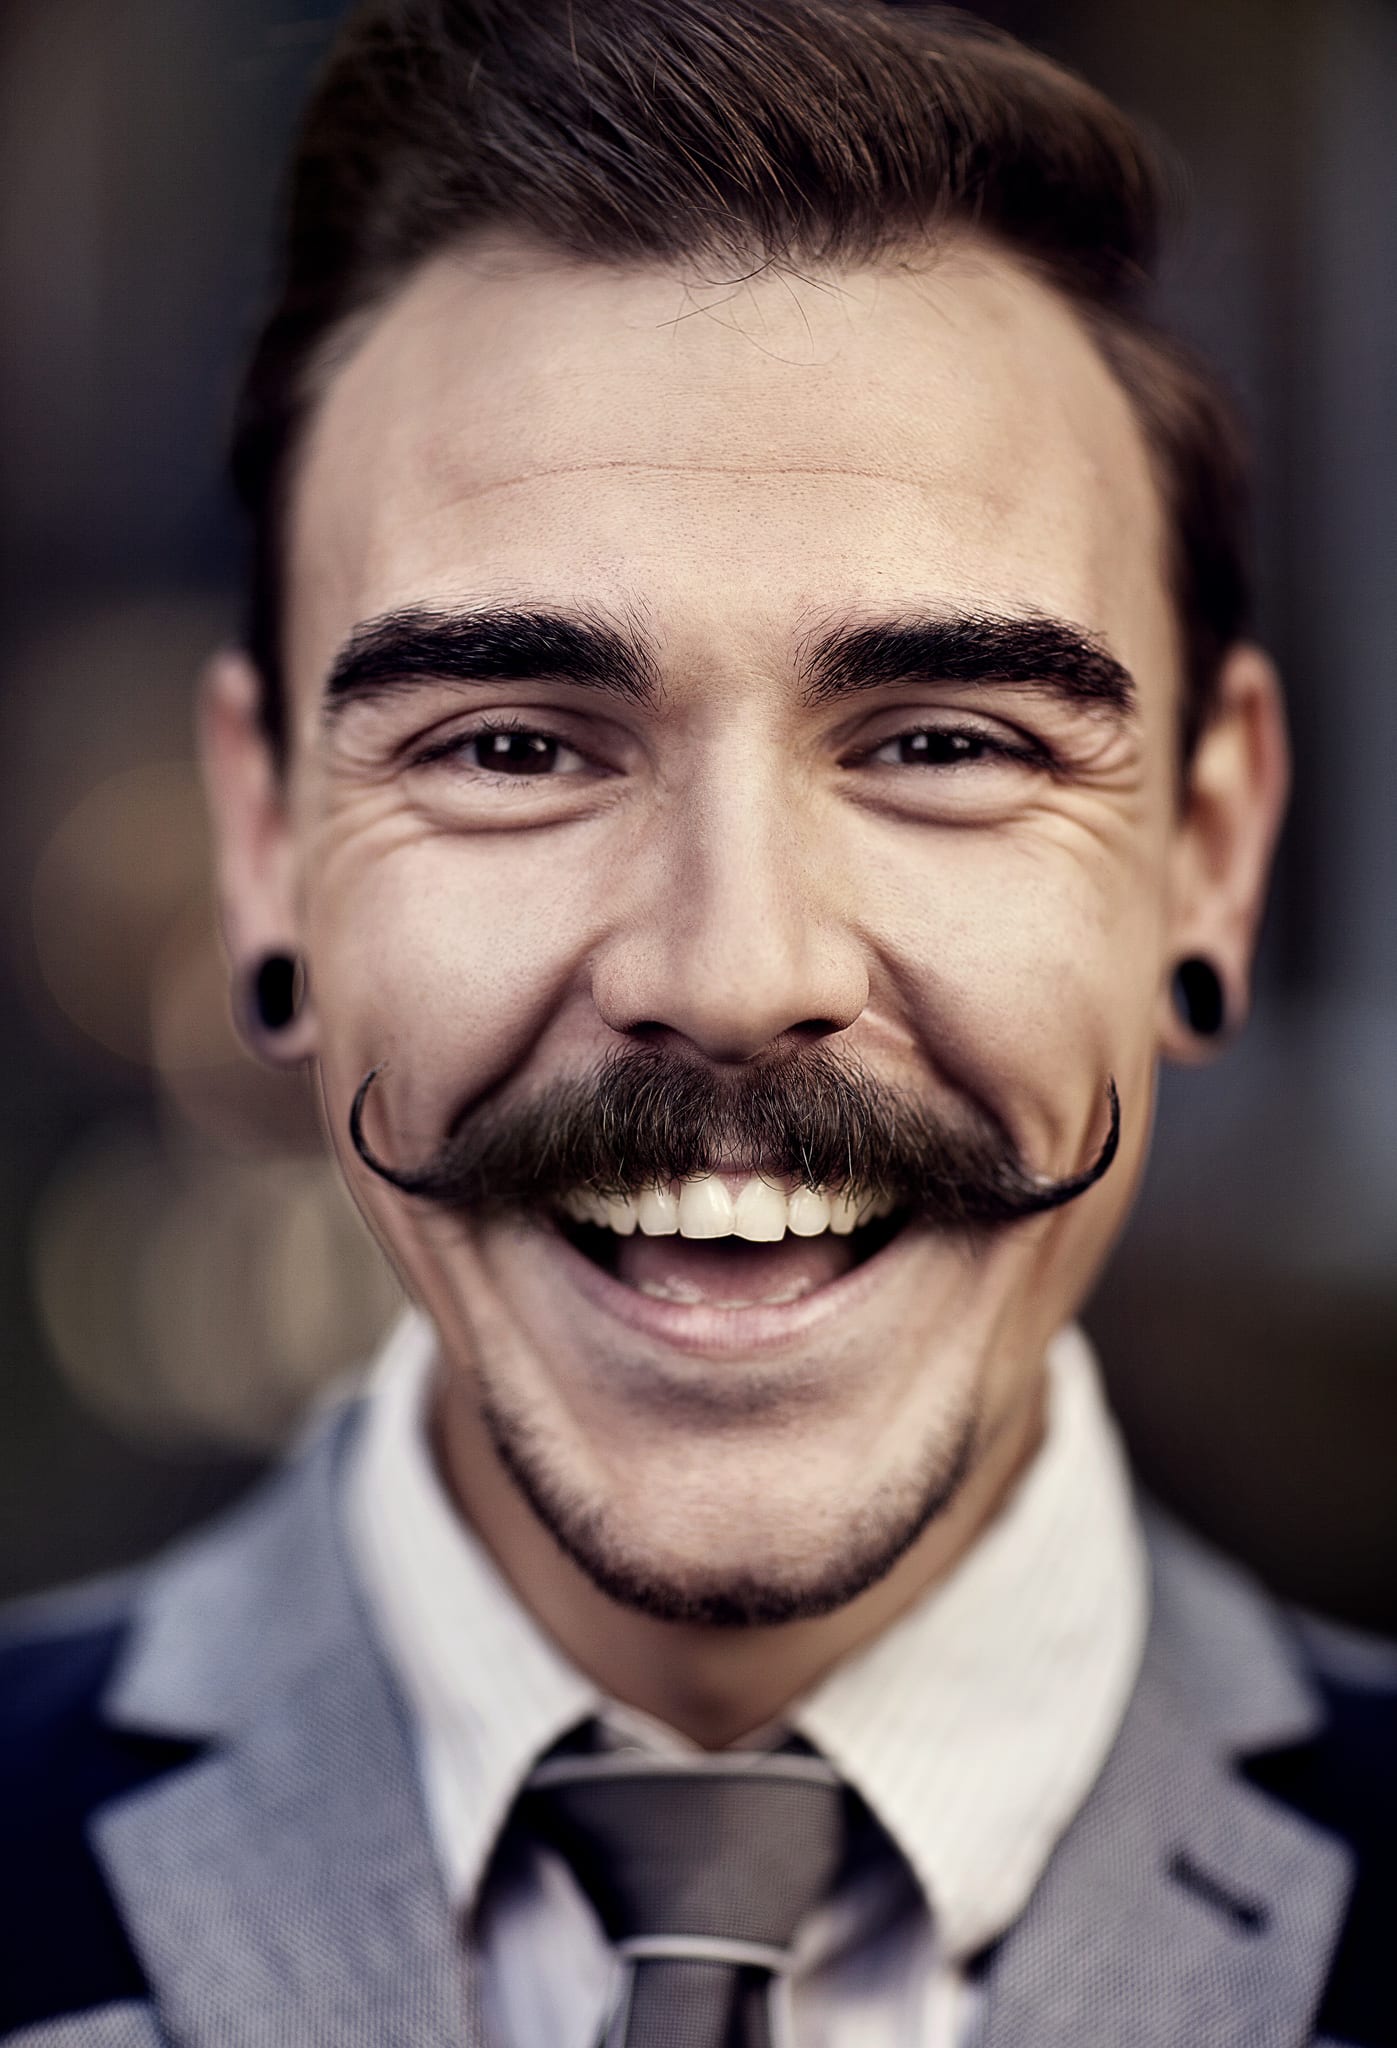 Moustache-Facial Hair Styles for men